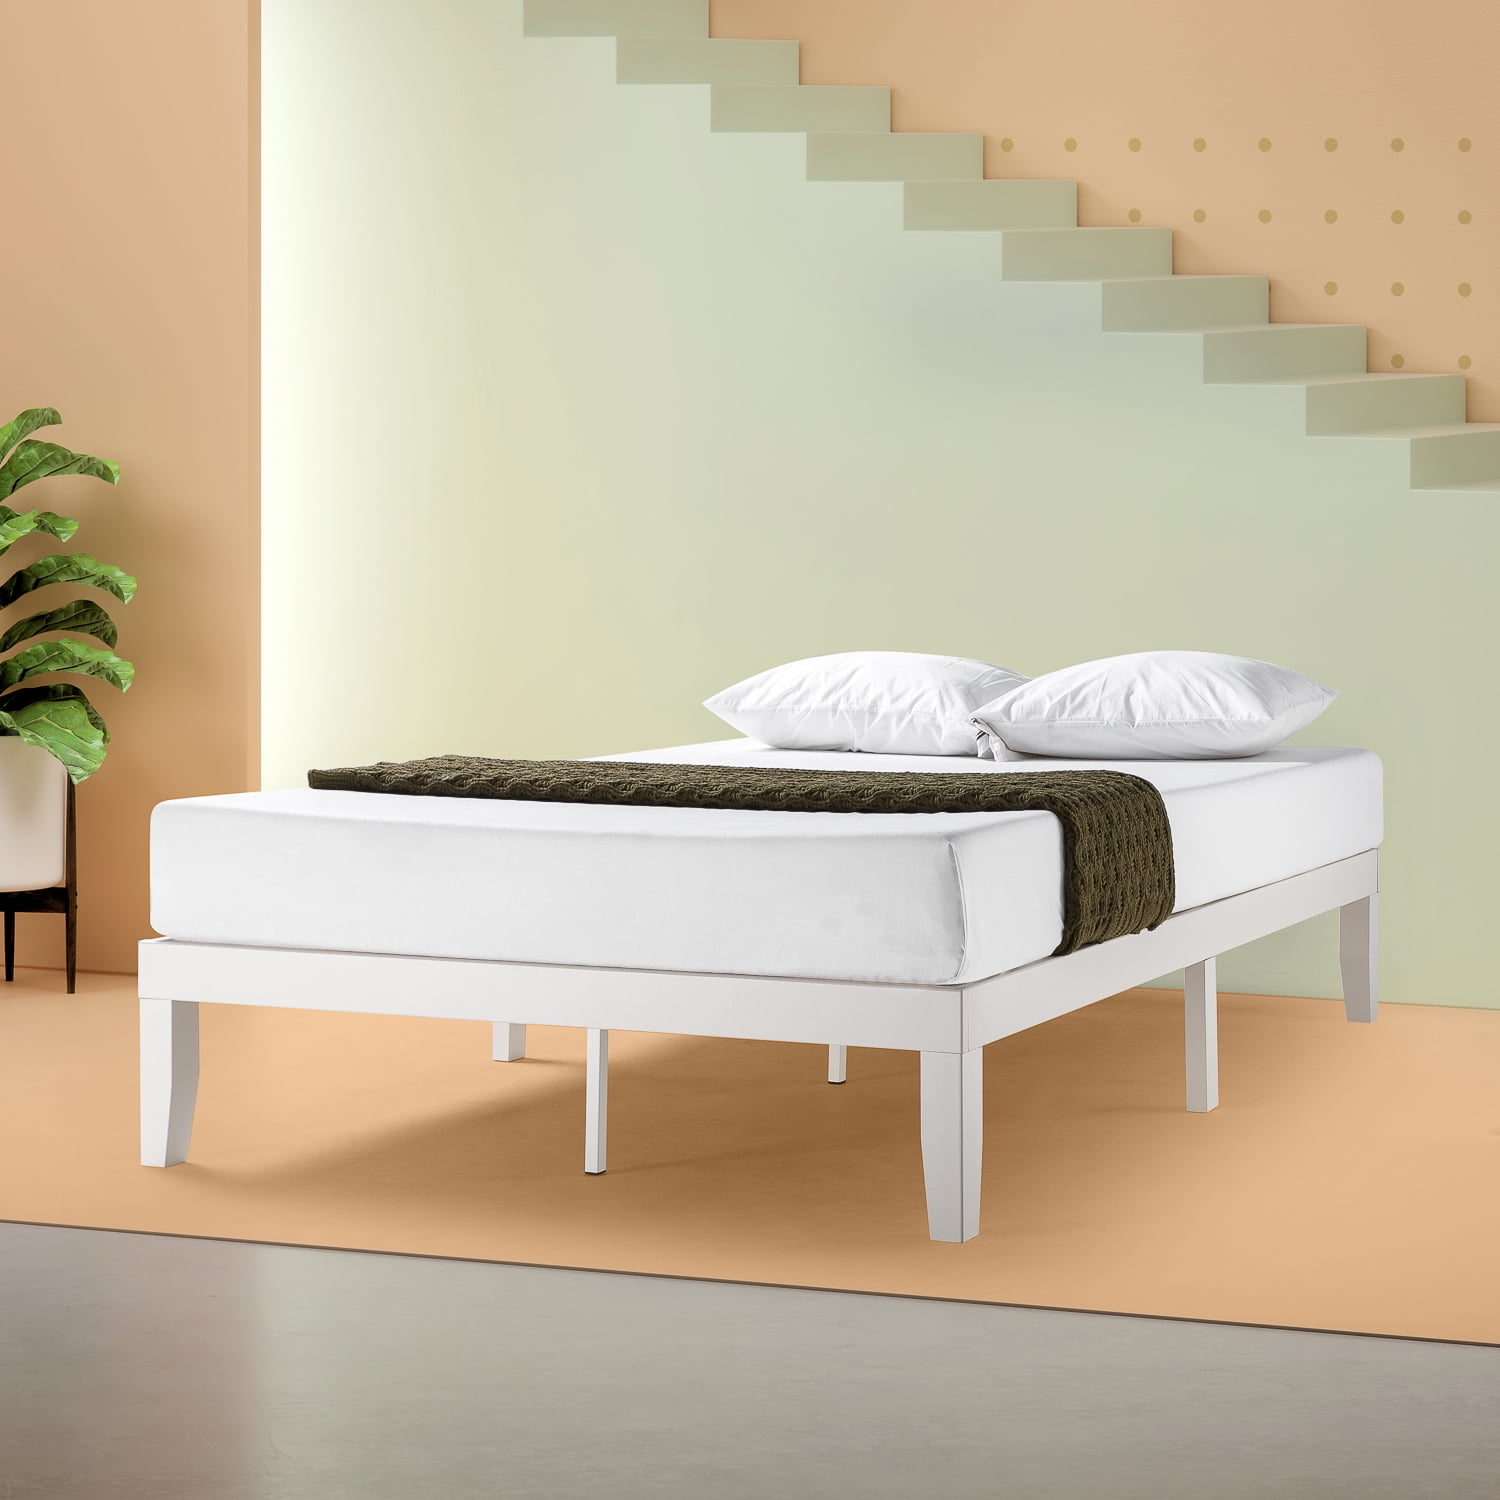 Zinus Moiz 14 Wood Platform Bed Full, Priage By Zinus Deluxe Antique Espresso Wood Platform Bed With Headboard